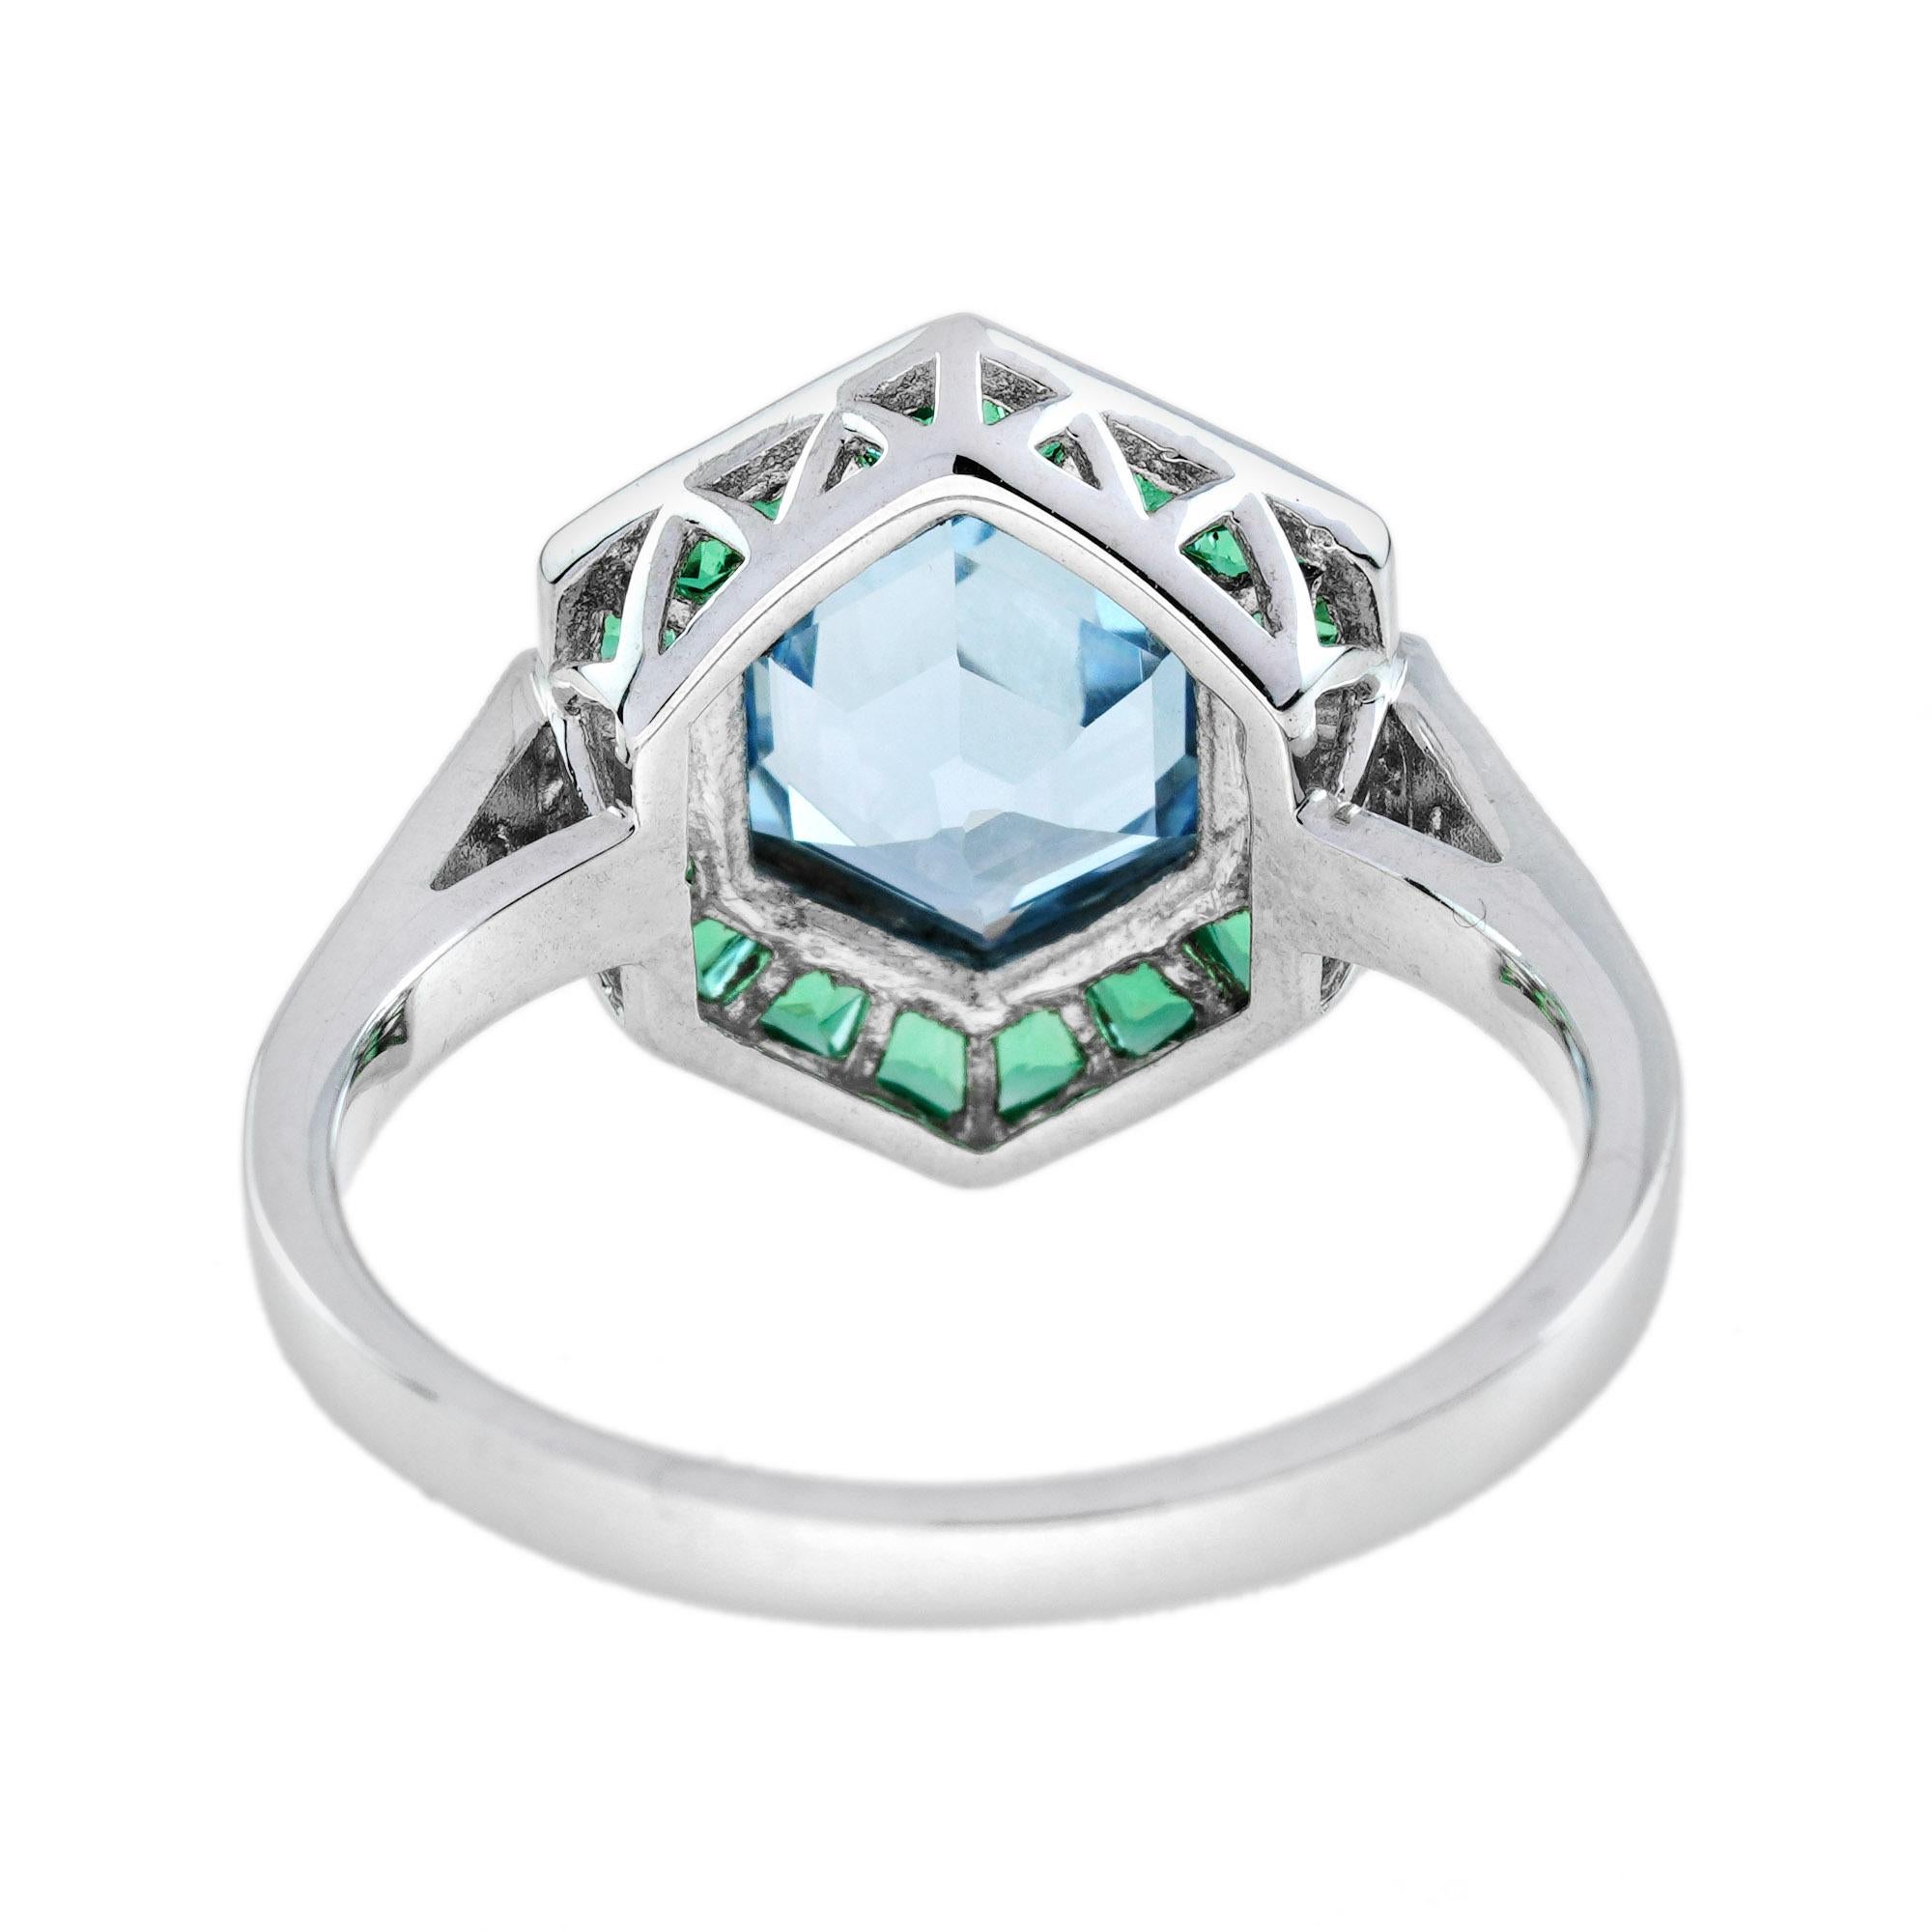 For Sale:  Aquamarine Emerald Diamond Art Deco Style Hexagon Ring in 18K White Gold 5